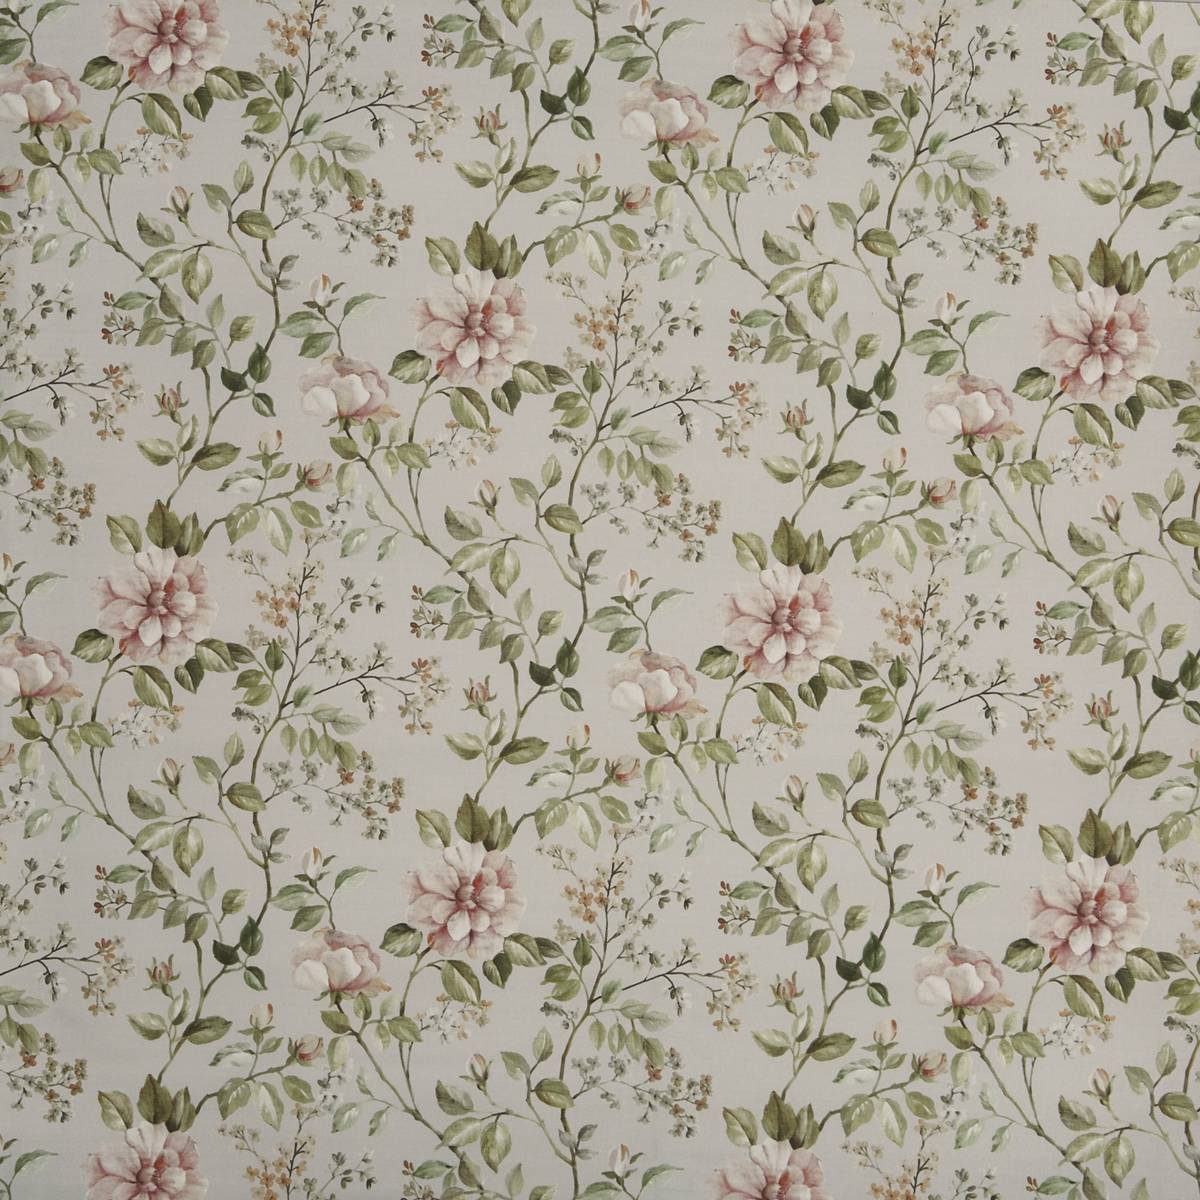 Fragrant Peach Blossom Fabric by Prestigious Textiles